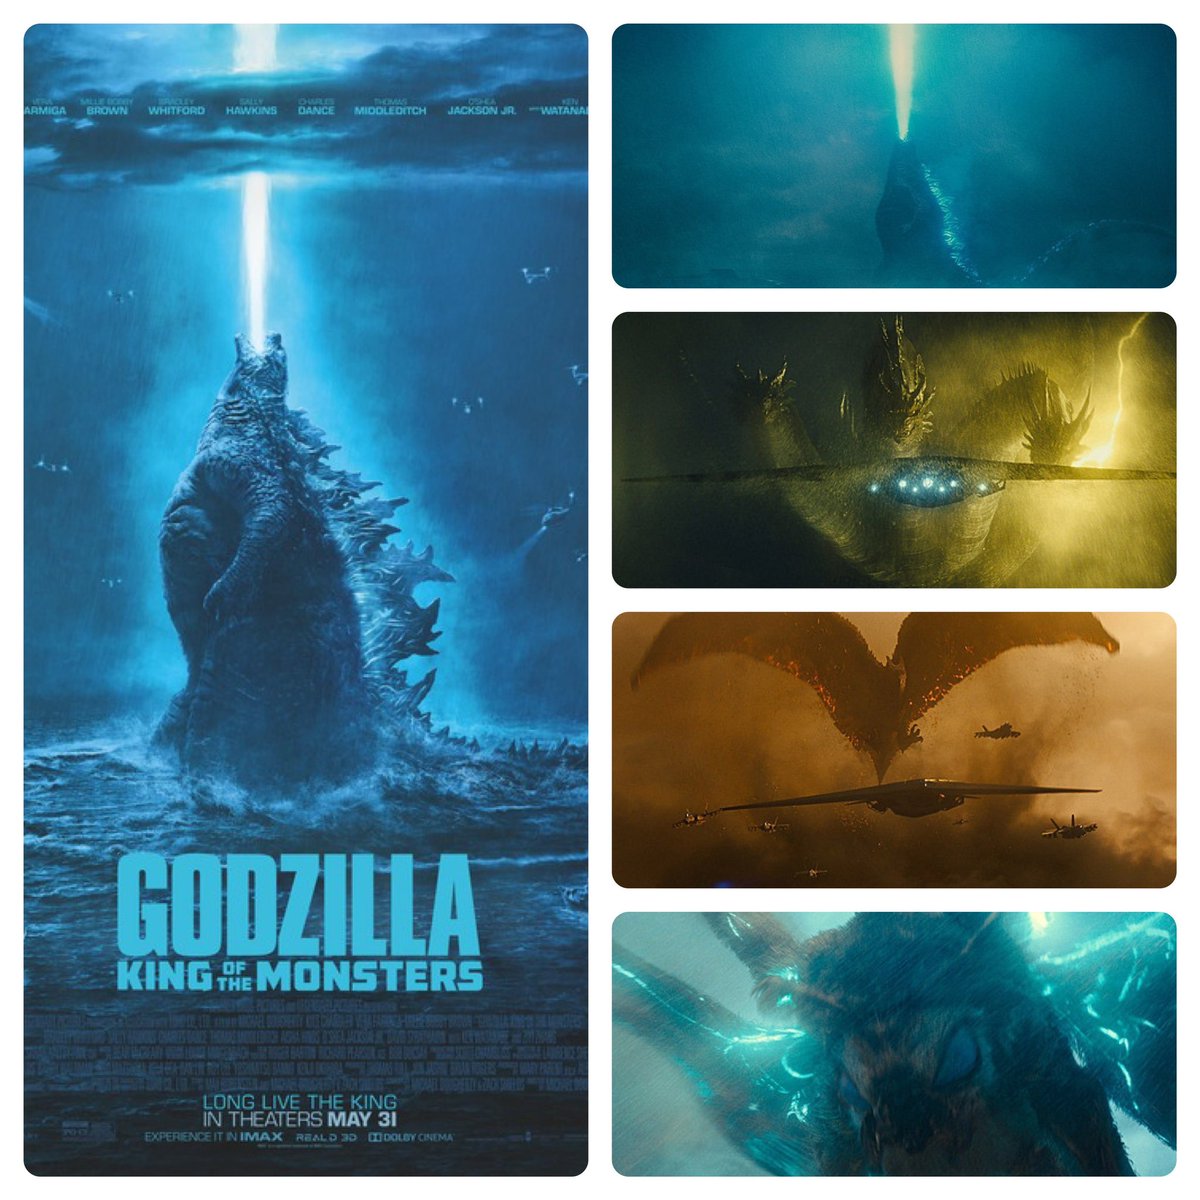 Godzilla: King of the Monsters celebrates 5th anniversary today.
#godzillakingofthemonsters #godzillakotm #godzilla2019 #godzillafan #godzilladdiction #monsterverse #gojira #toho #東宝 #kylechandler #kenwatanabe #渡辺謙 #verafarmiga #milliebobbybrown 
#zhangziyi #warnerbros